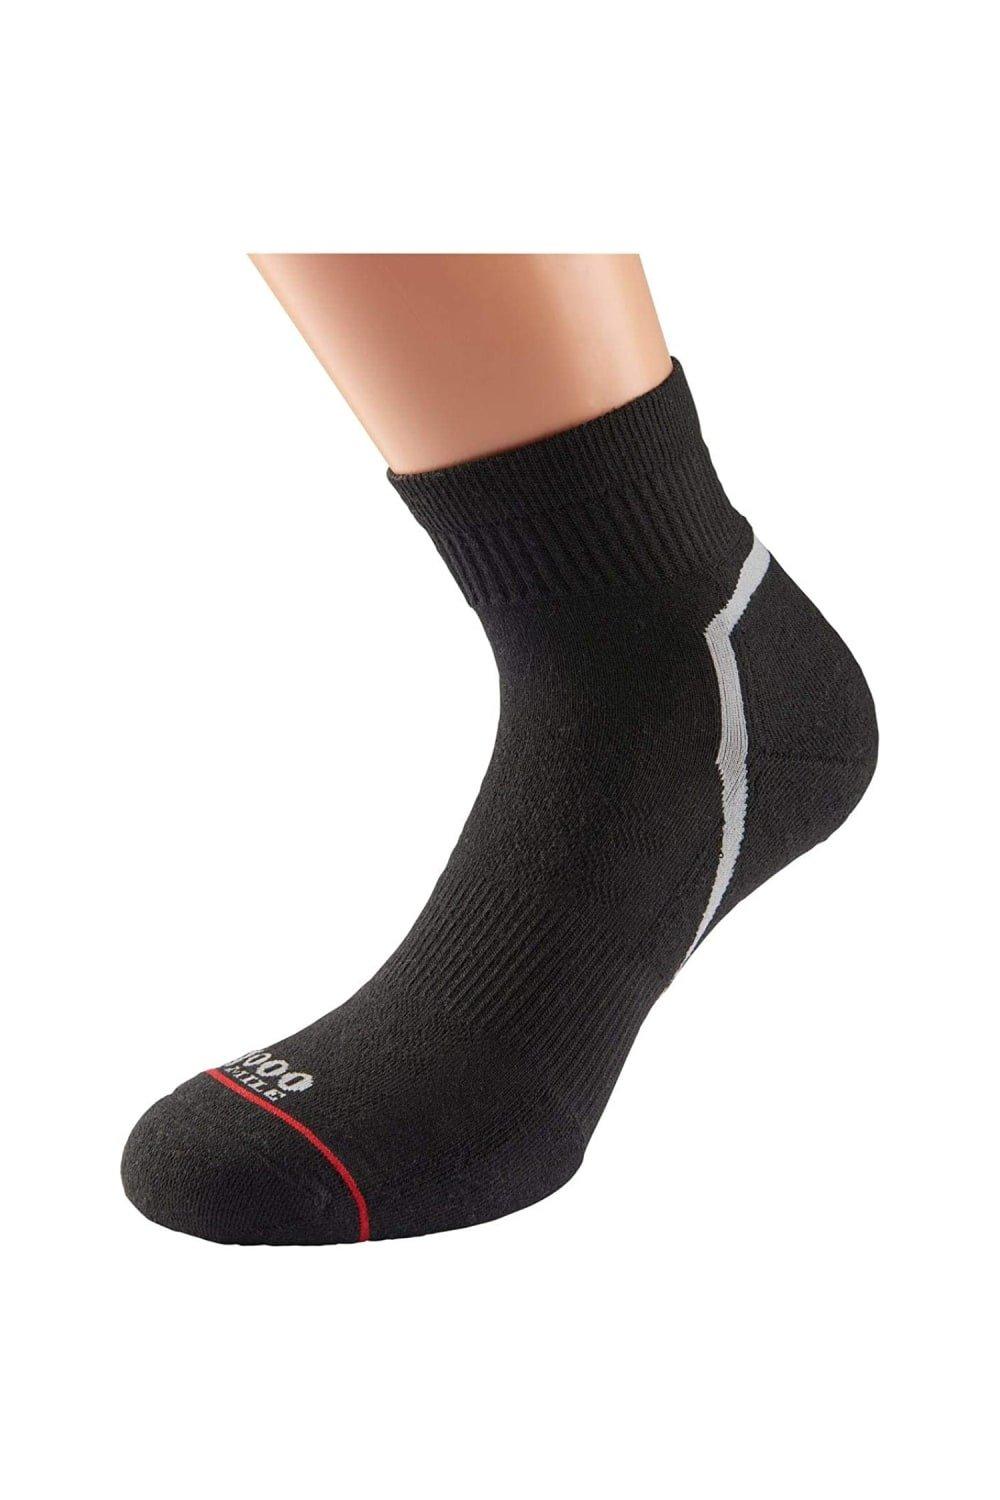 QTR Active Socks